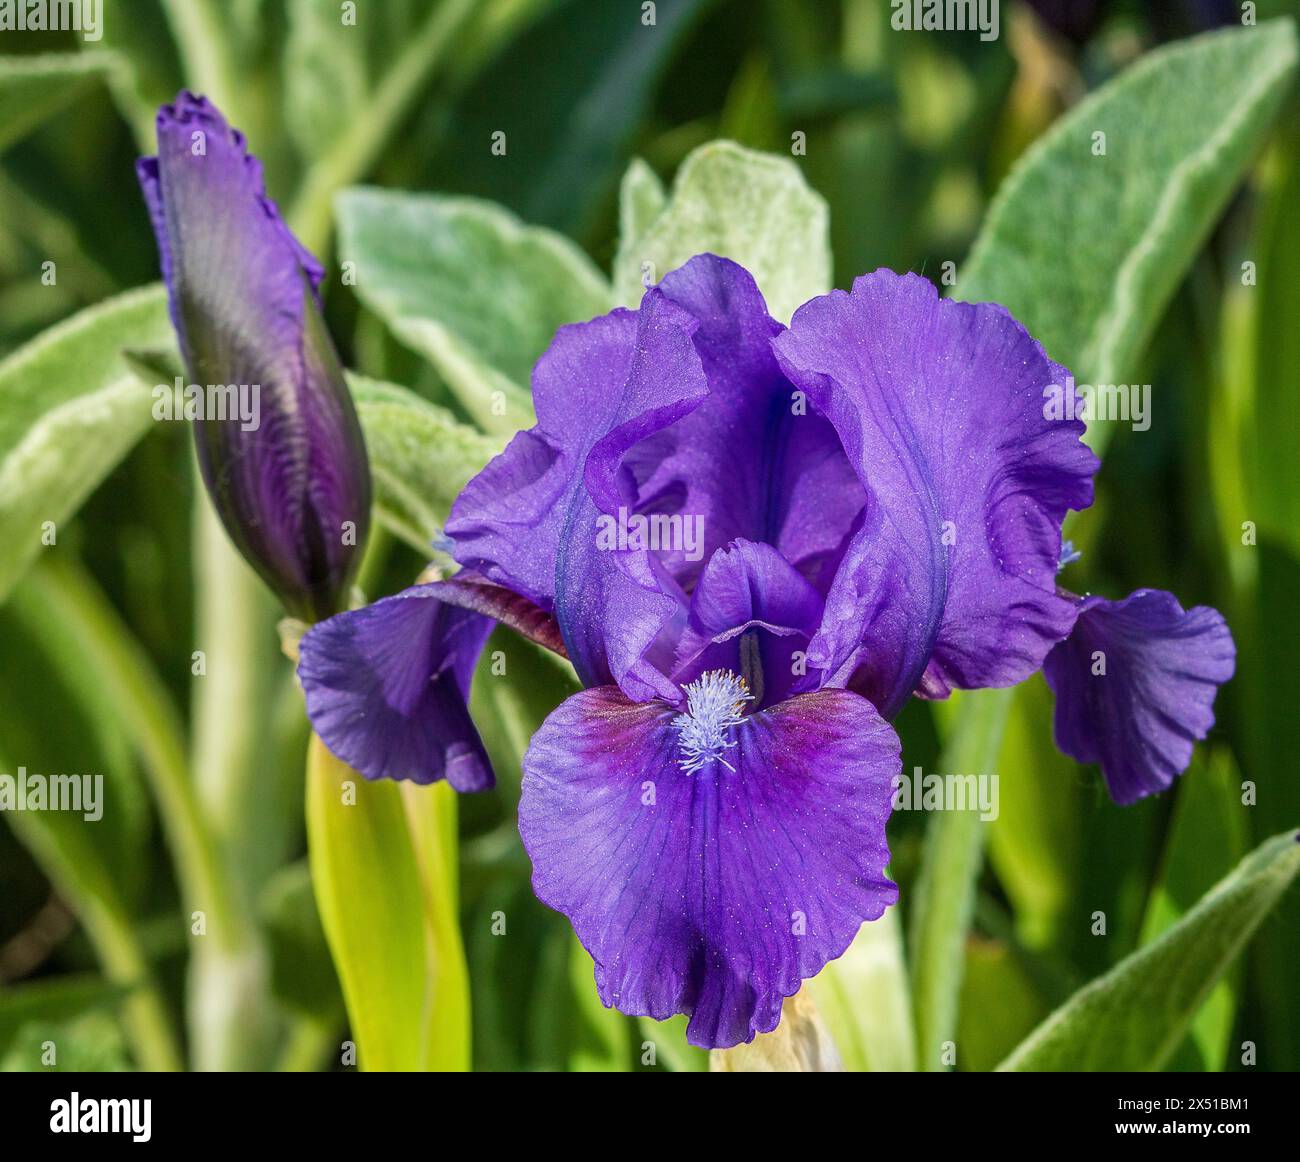 Blue iris flower on a blurred background illuminated by a sunbeam Stock Photo